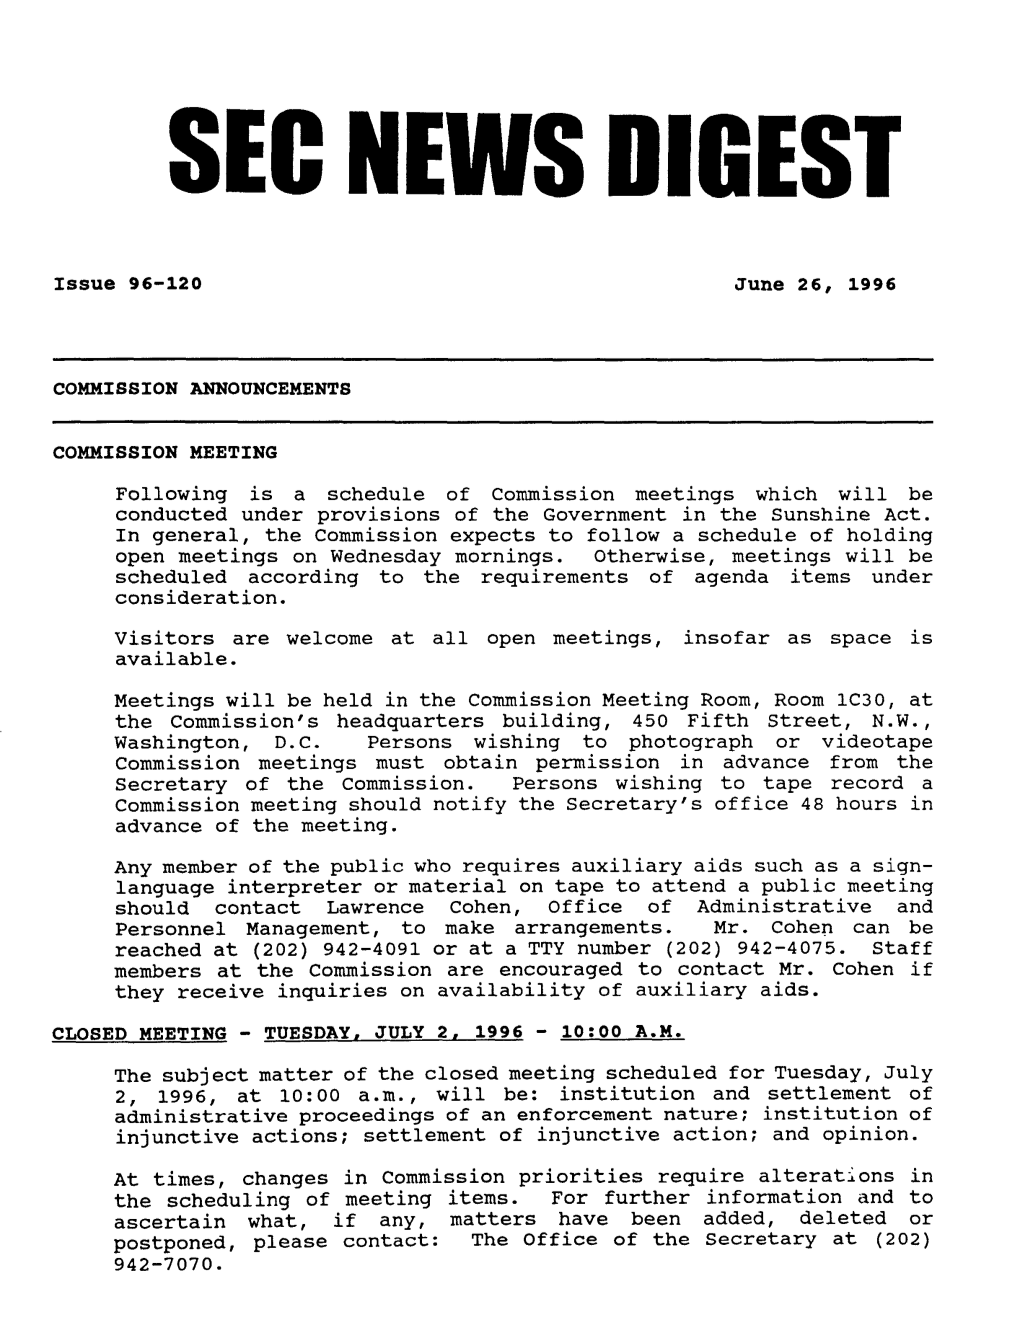 SEC News Digest, 06-26-1996